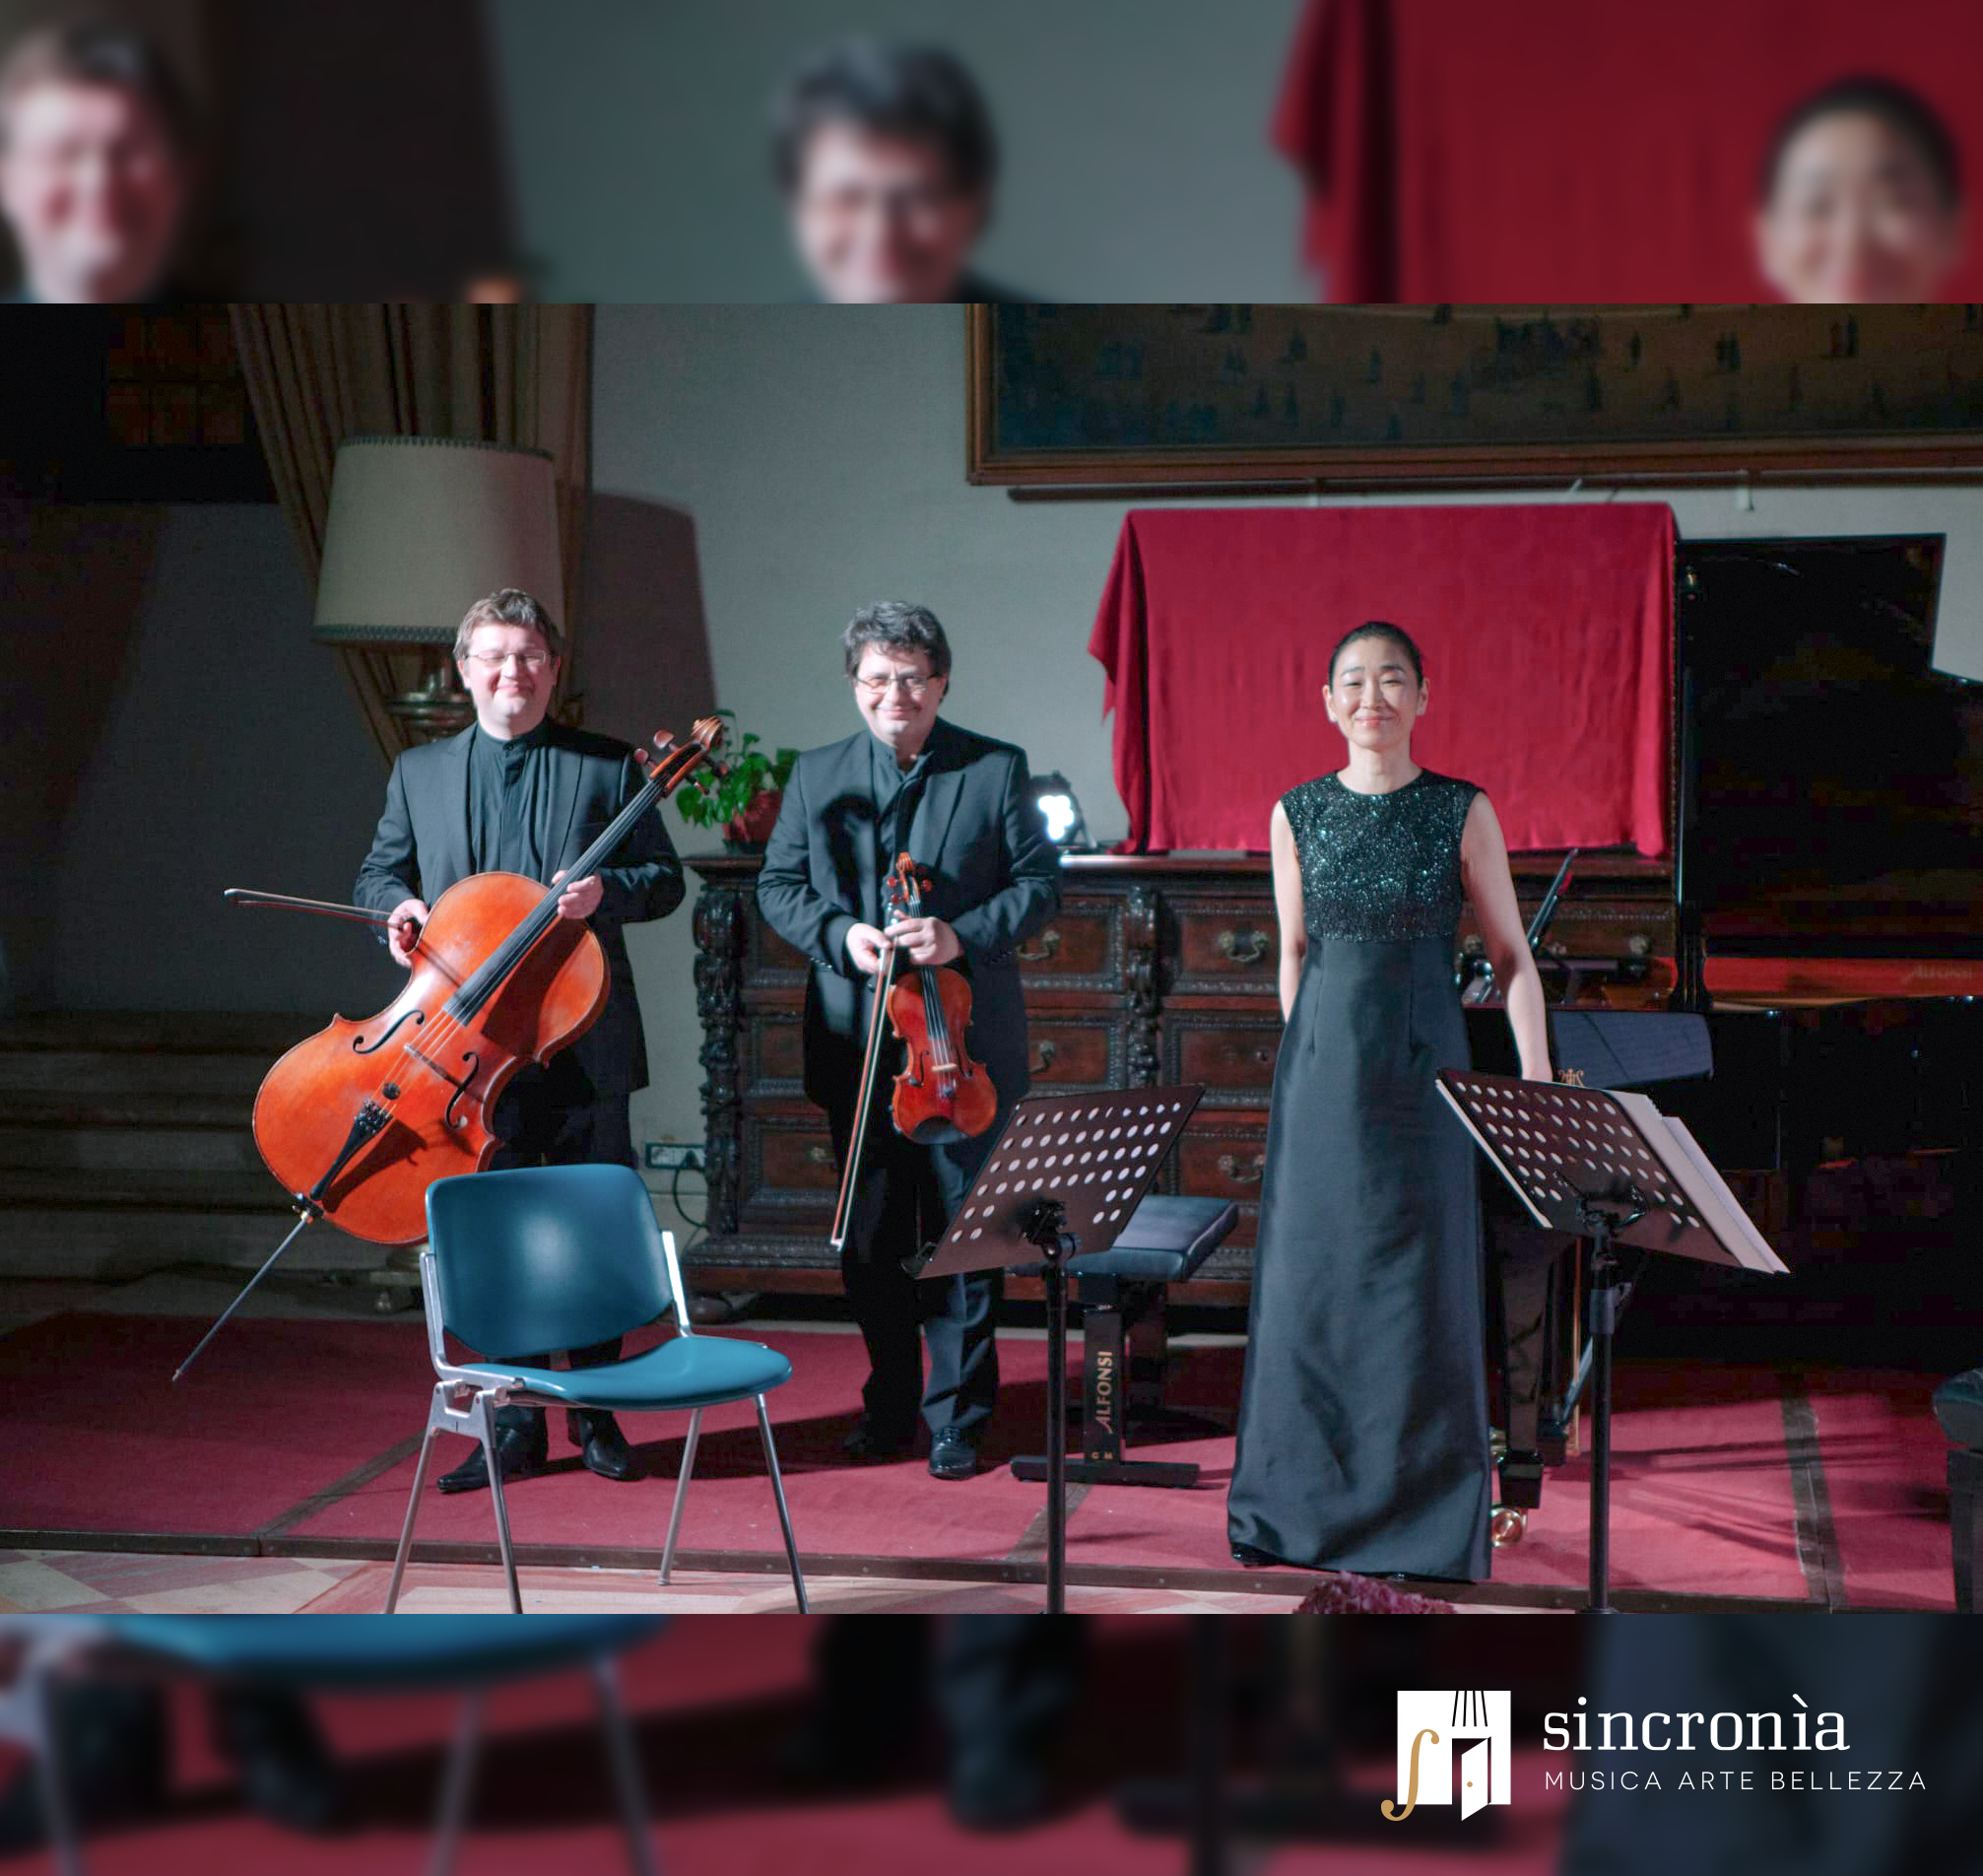 Sincronìa Concert Series 2021/22 – AOIDE Trio